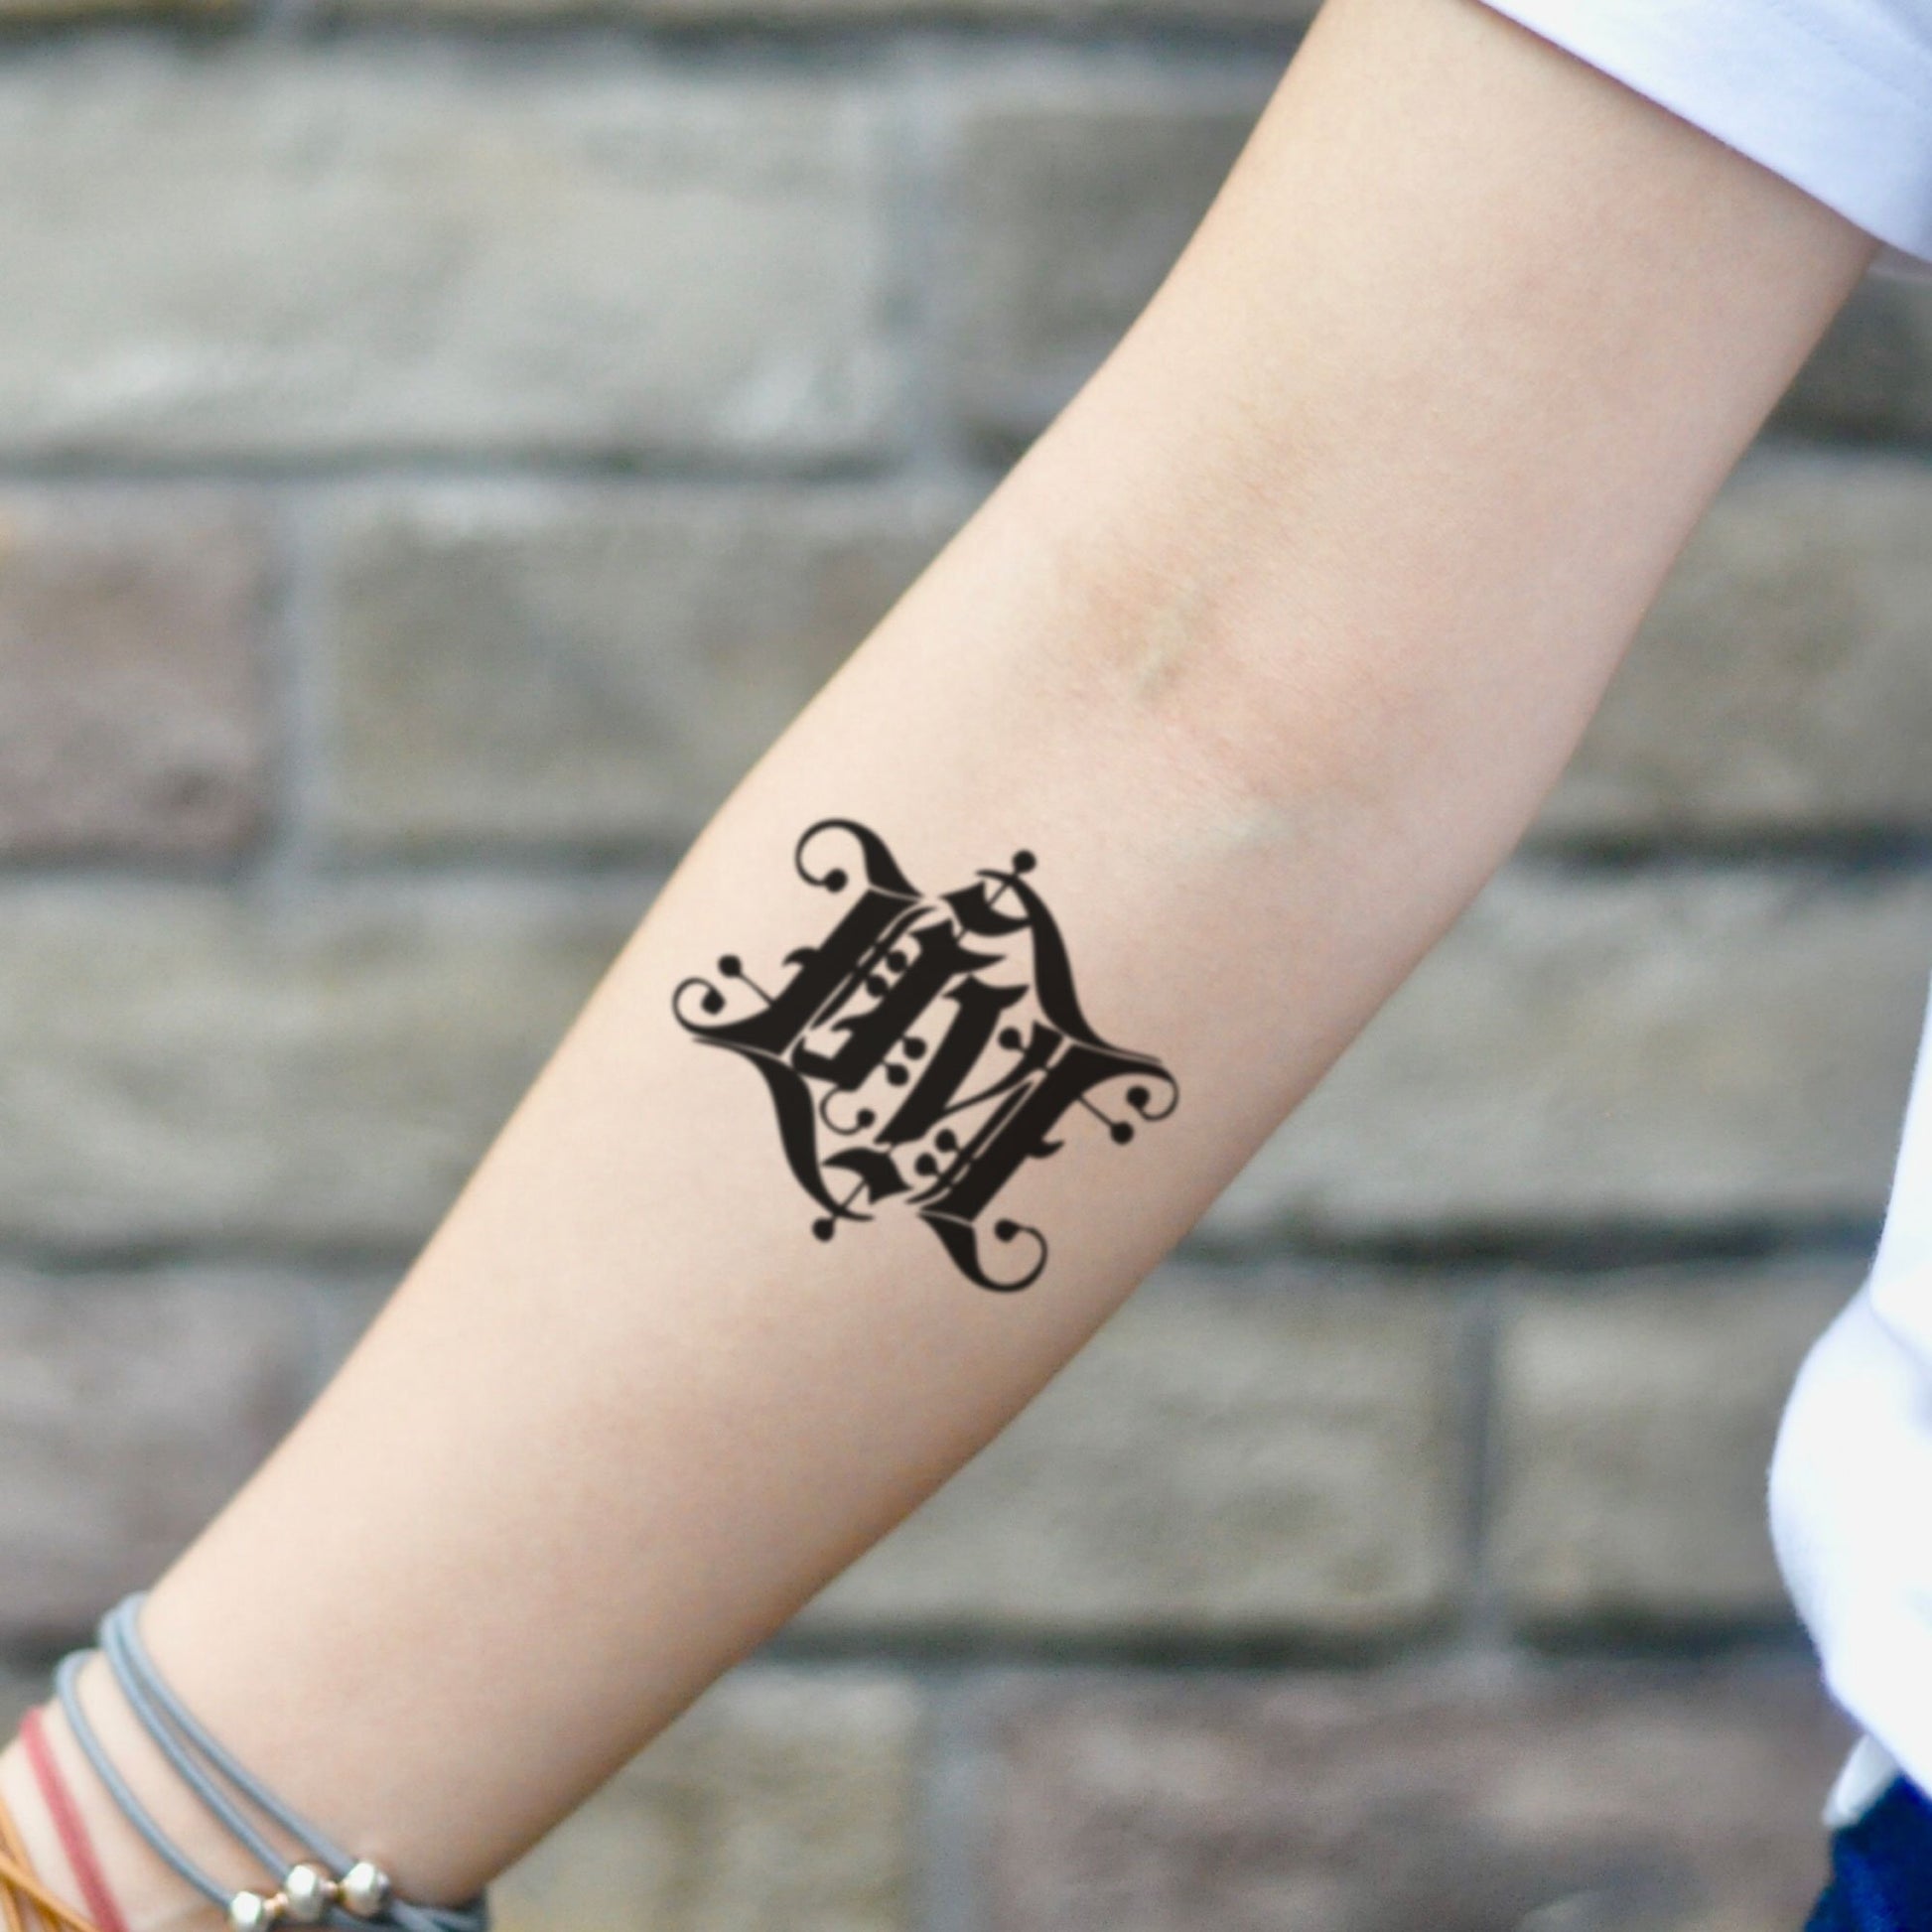 fake small live evil ambigram lettering temporary tattoo sticker design idea on inner arm